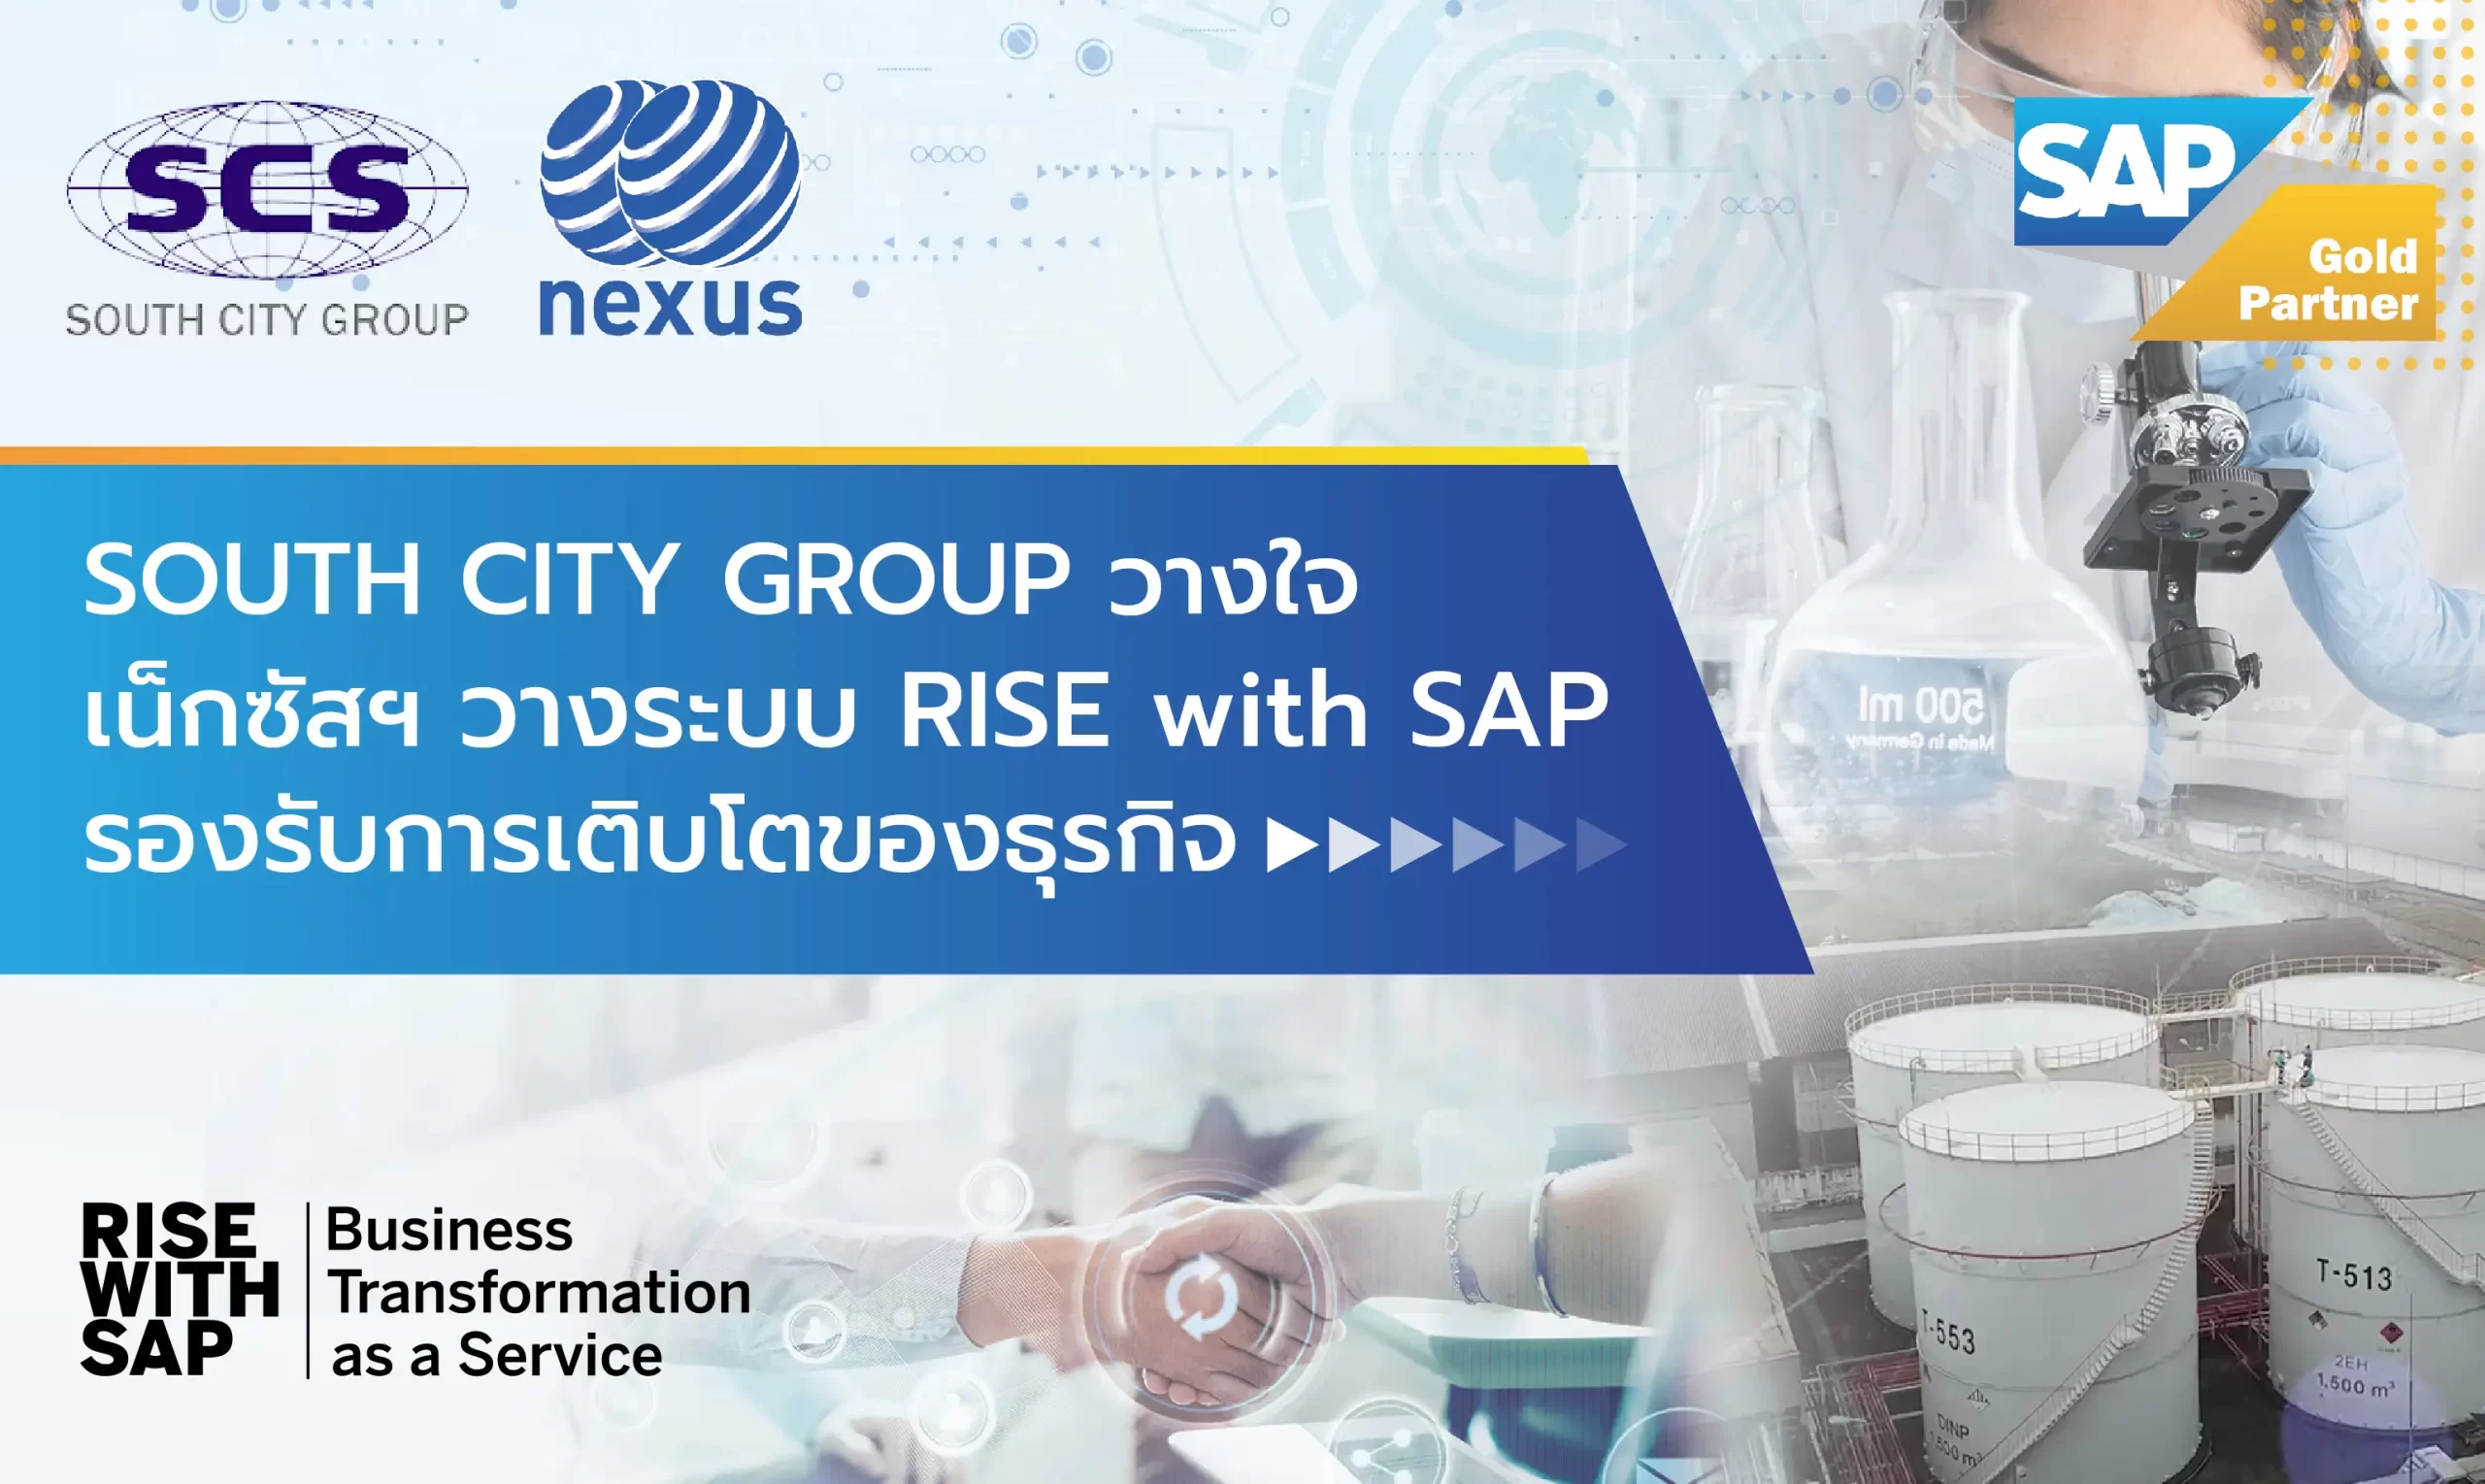 SOUTH CITY GROUP วางใจ เน็กซัสฯ วางระบบ Rise with SAP ระบบ ERP ขนาดใหญ่ รองรับการเติบโตของธุรกิจ Intelligent Enterprise | NEXUS Thailand